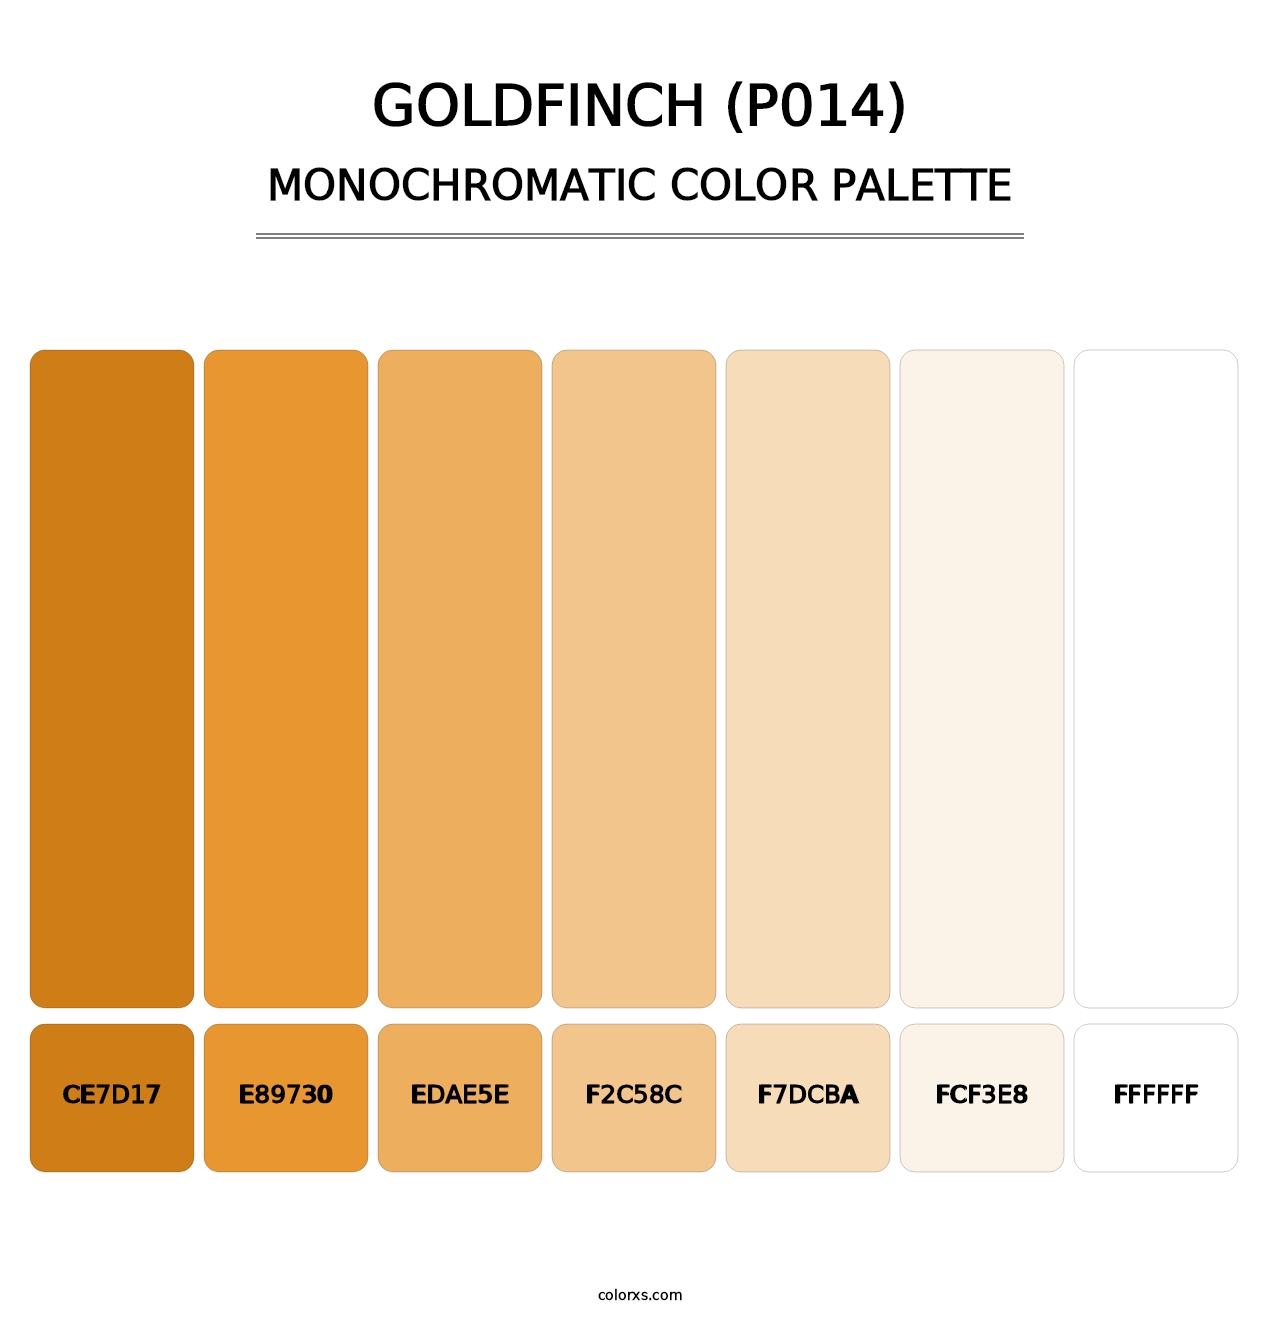 Goldfinch (P014) - Monochromatic Color Palette